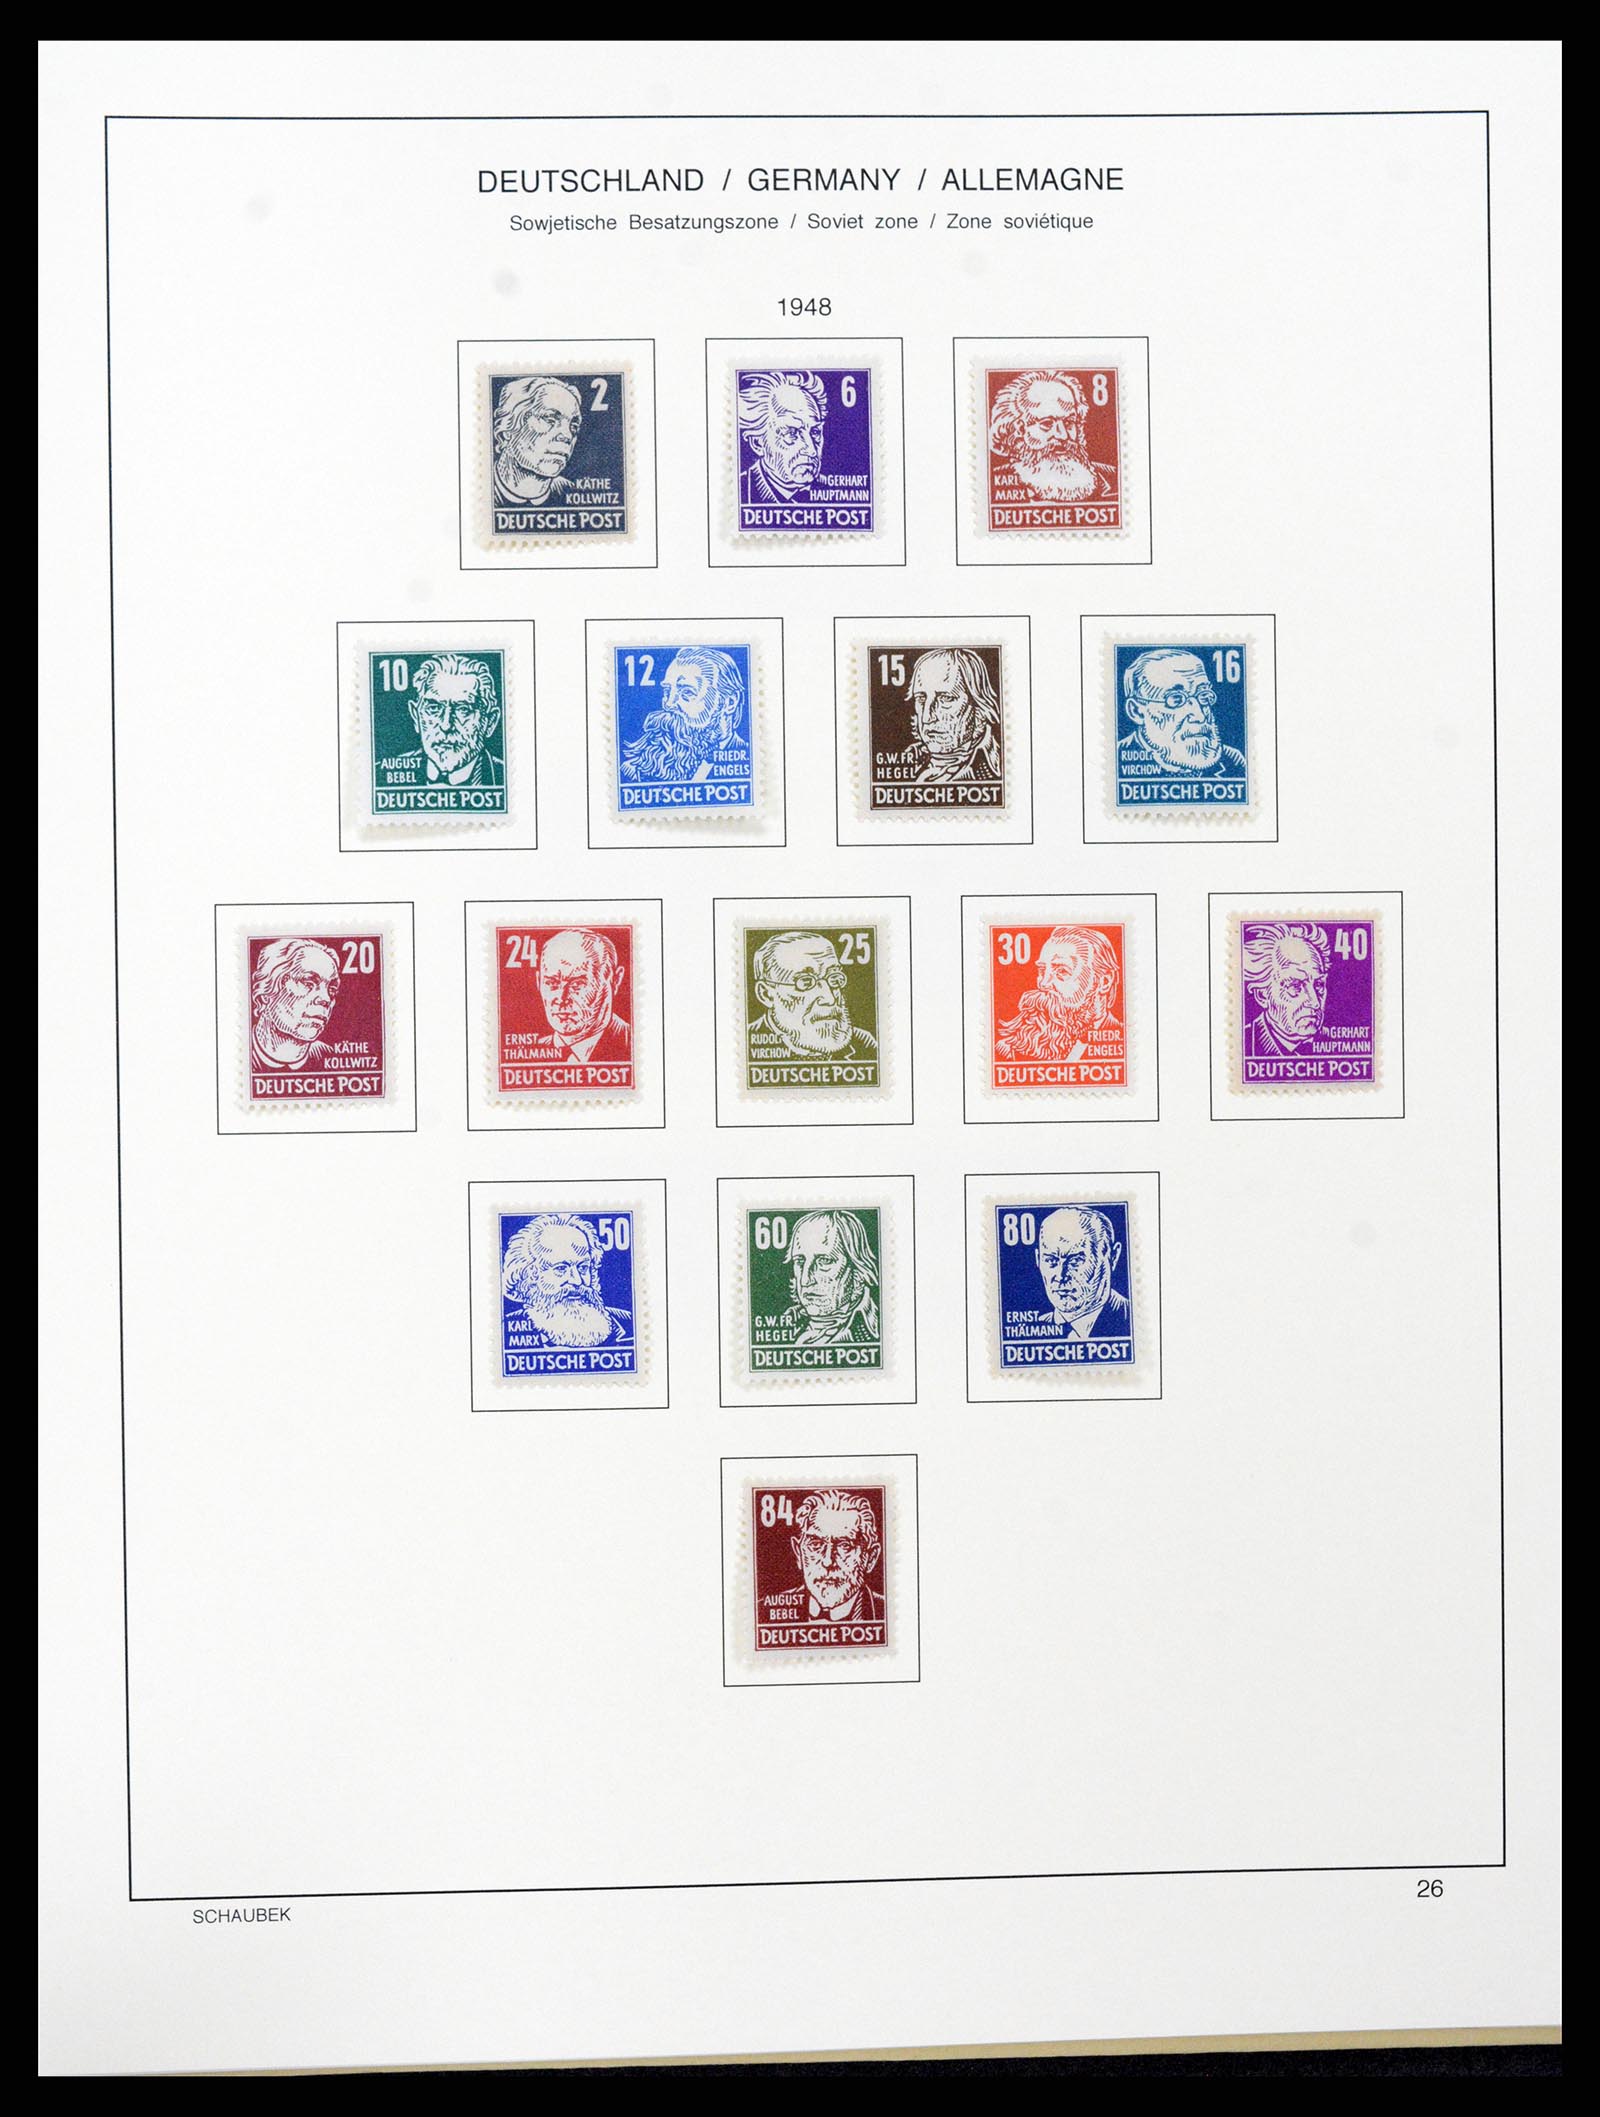 37645 053 - Stamp collection 37645 German Zones 1945-1949.